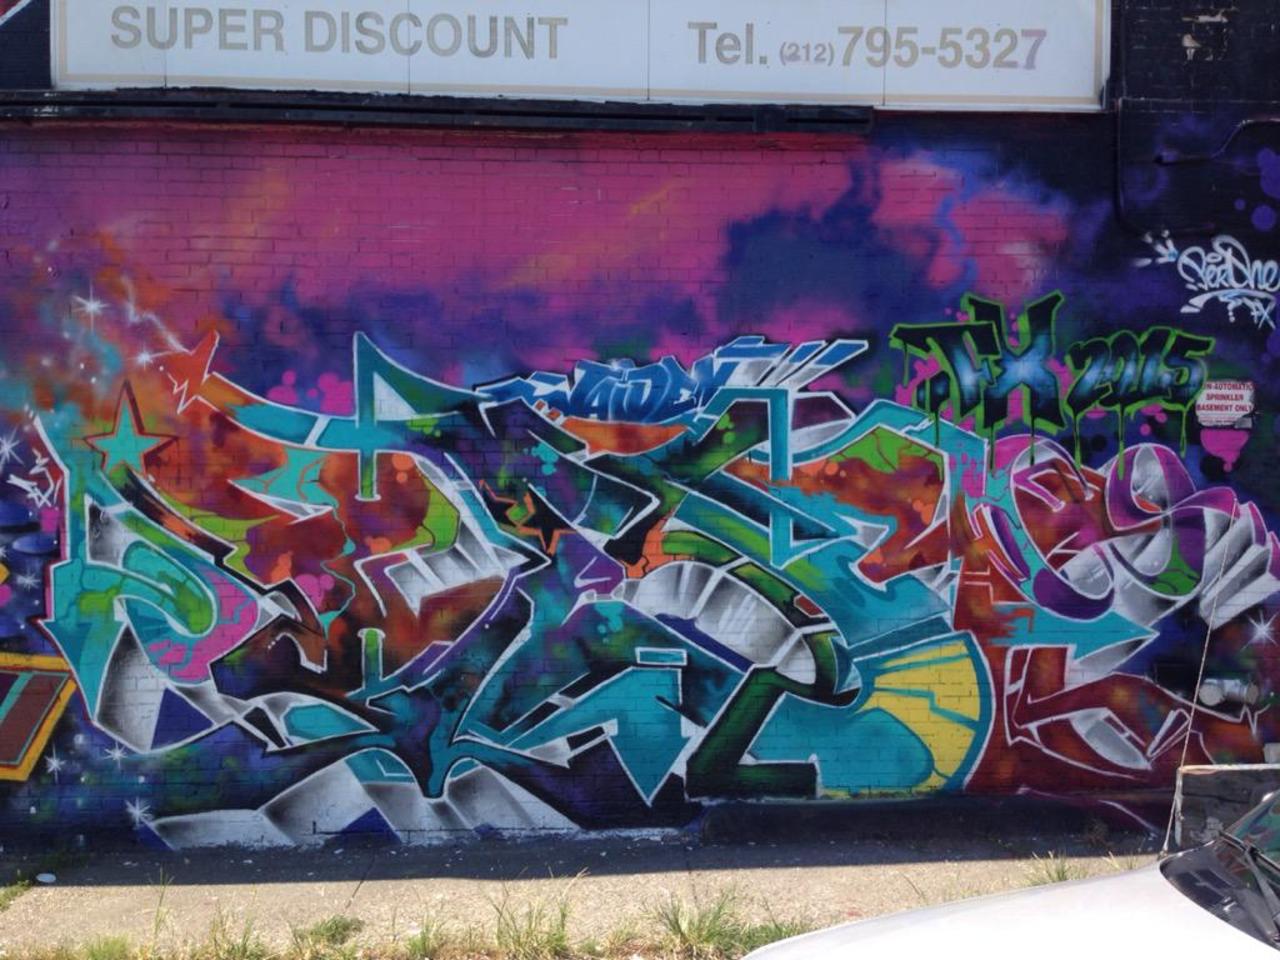 RT @Streetart_Photo: Amazing wildstyle by peronefx #Bronx #NYC #art #graffiti #streetart #colors #sprayart #montanacans #peronefx #uptown http://t.co/5XIlSdODXc